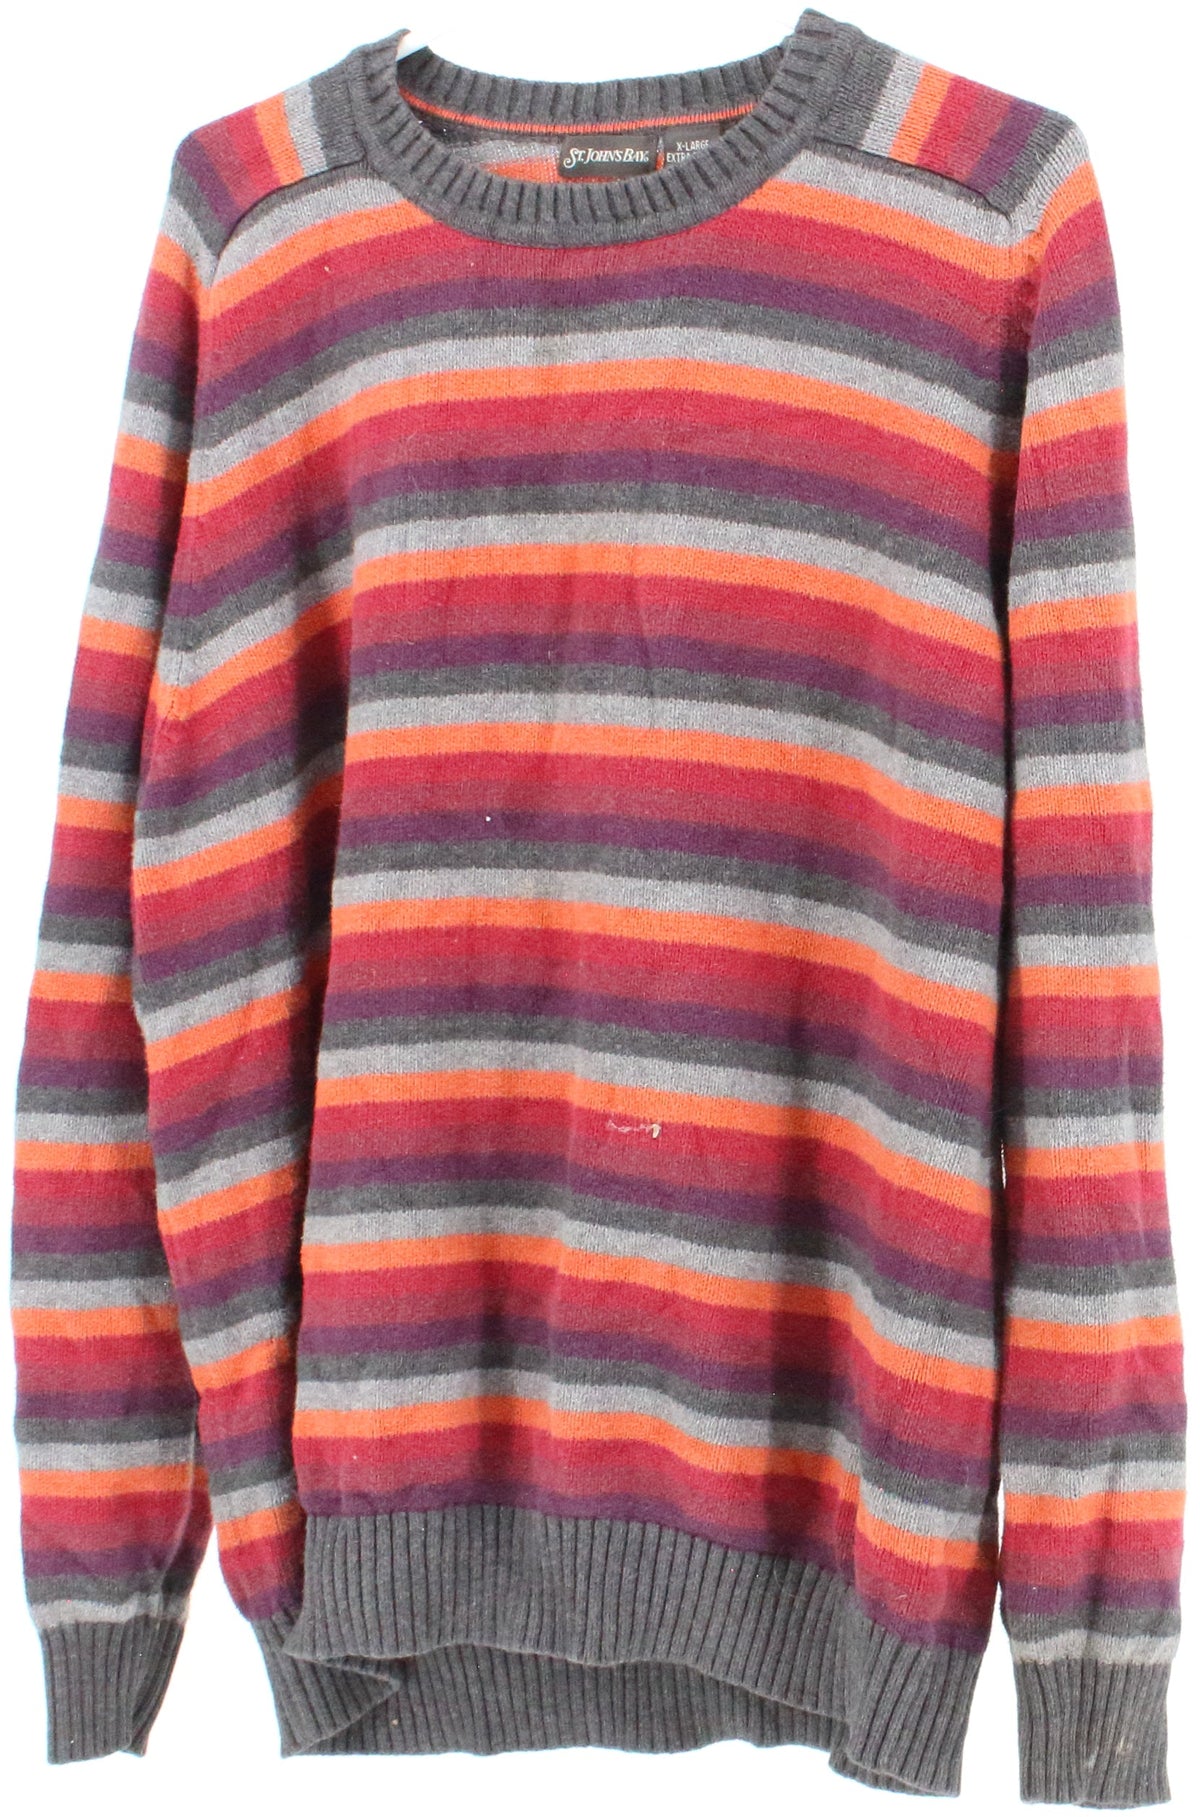 St John's Bay Dark Grey Burgundy and Orange Striped Sweater